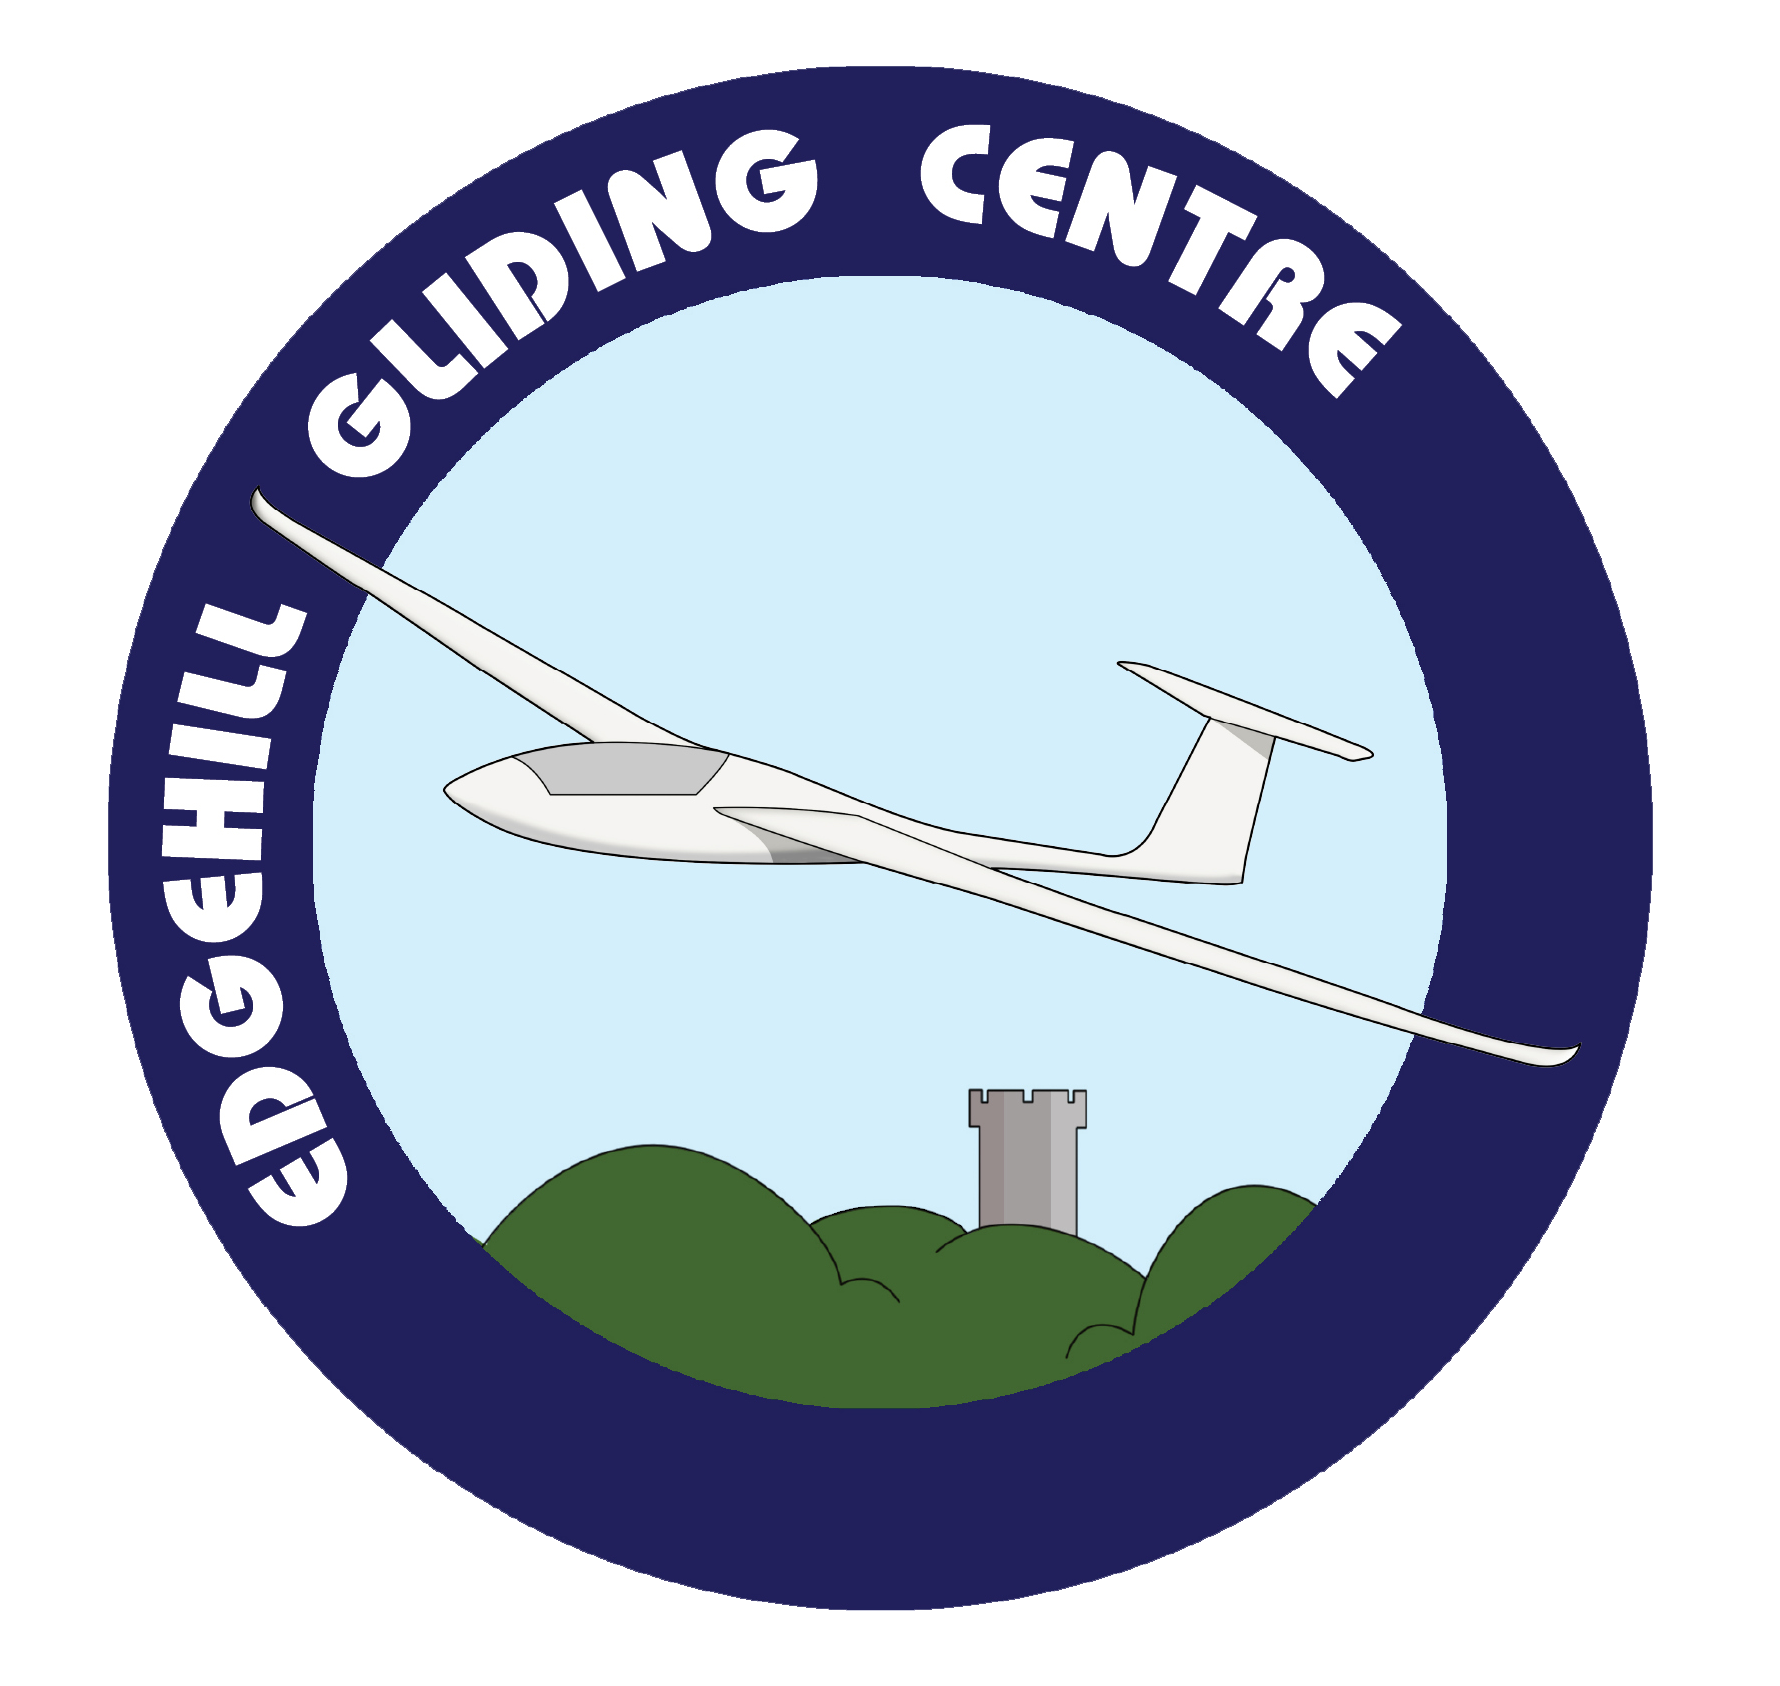 Edgehill Gliding Centre logo